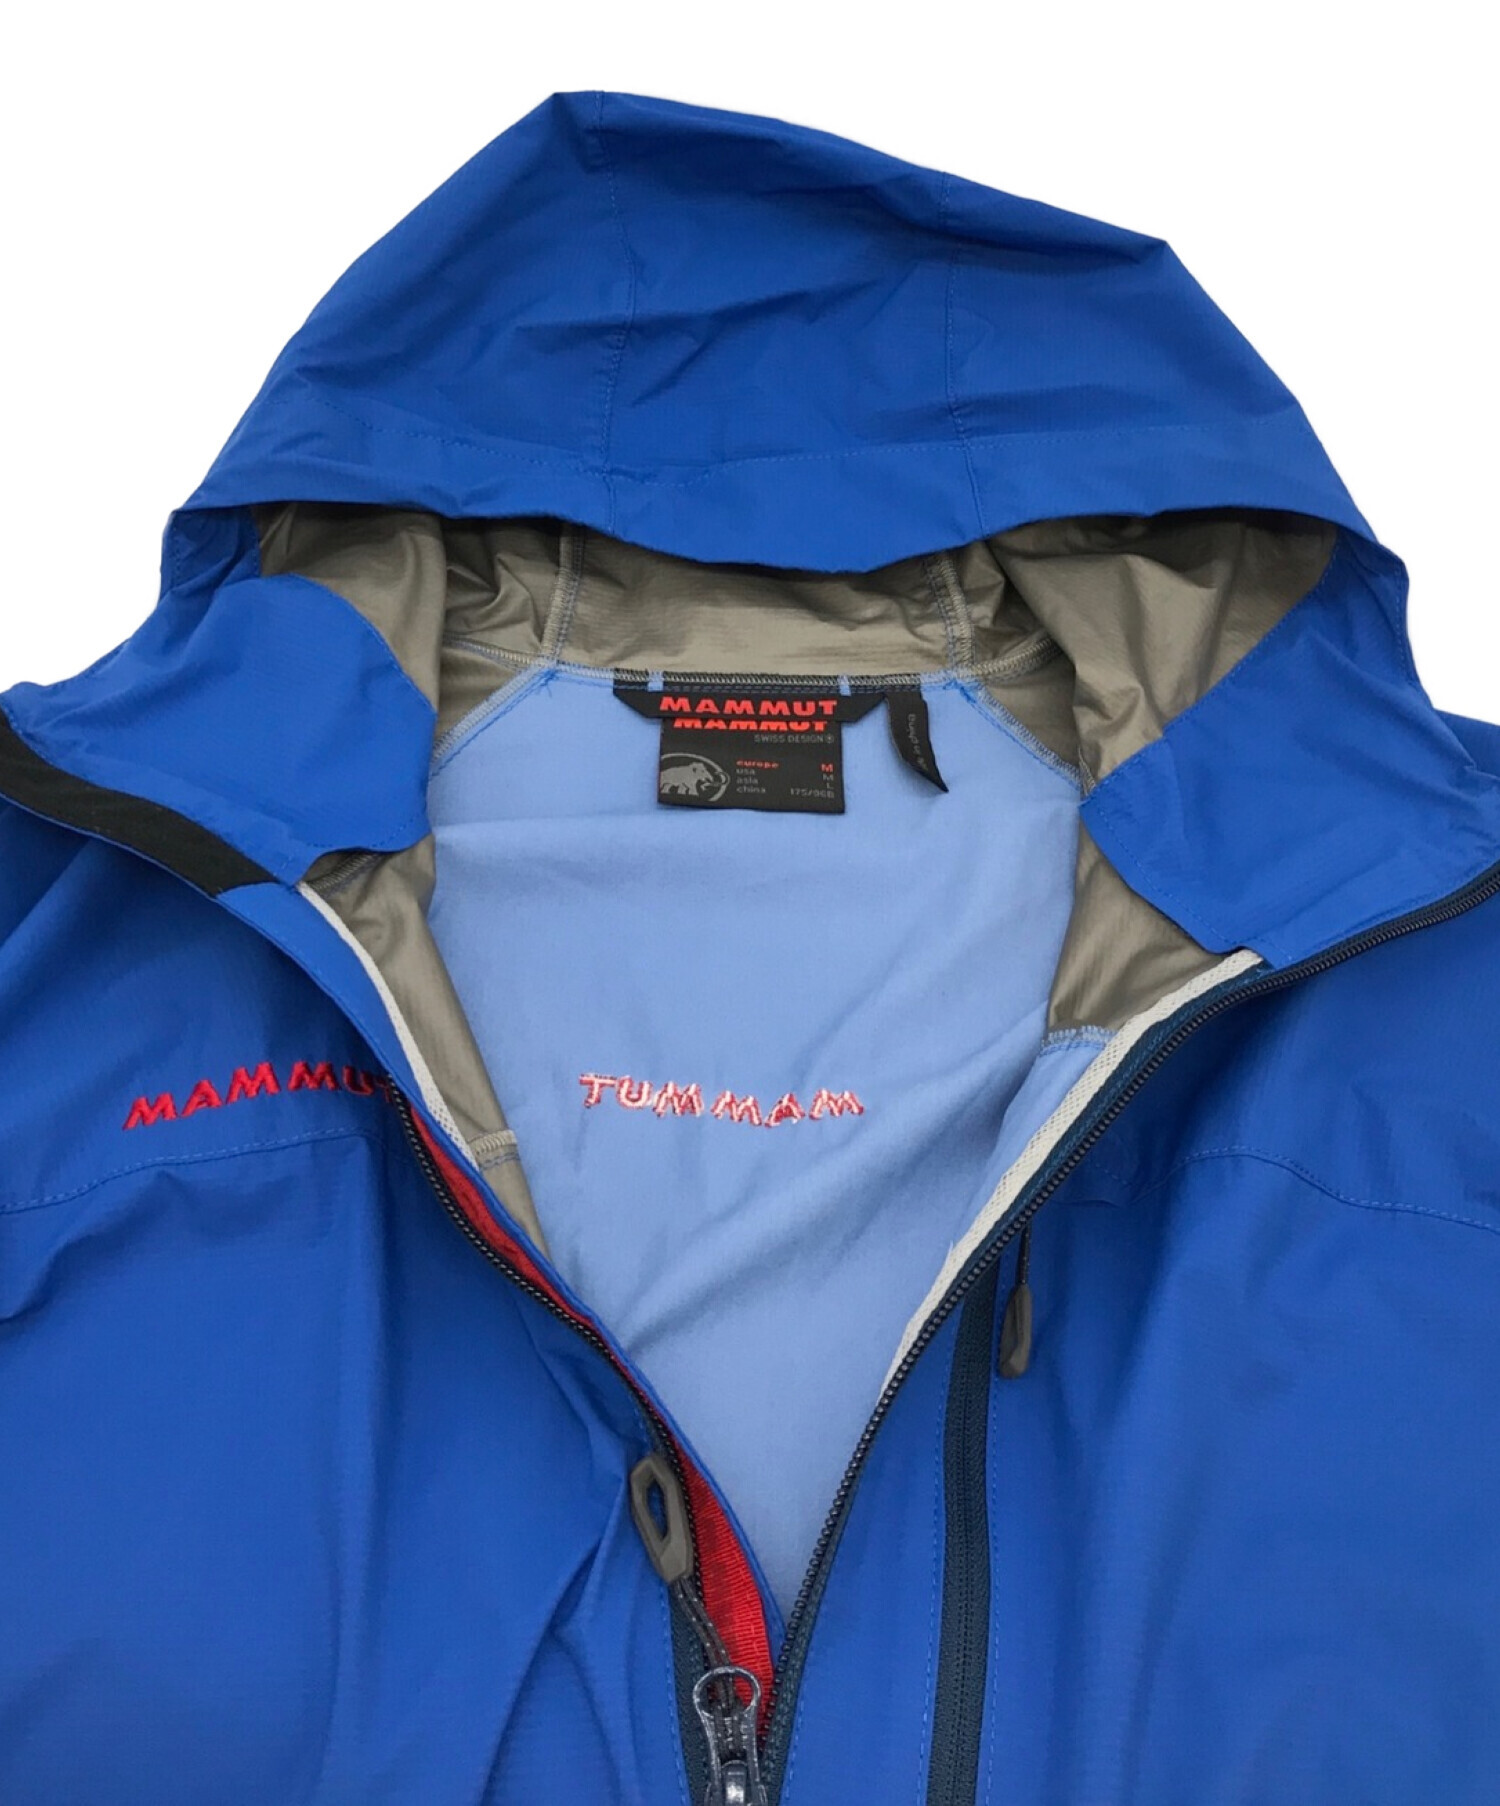 MAMMUT (マムート) ライトスピードハイブリッドジャケット ブルー サイズ:M